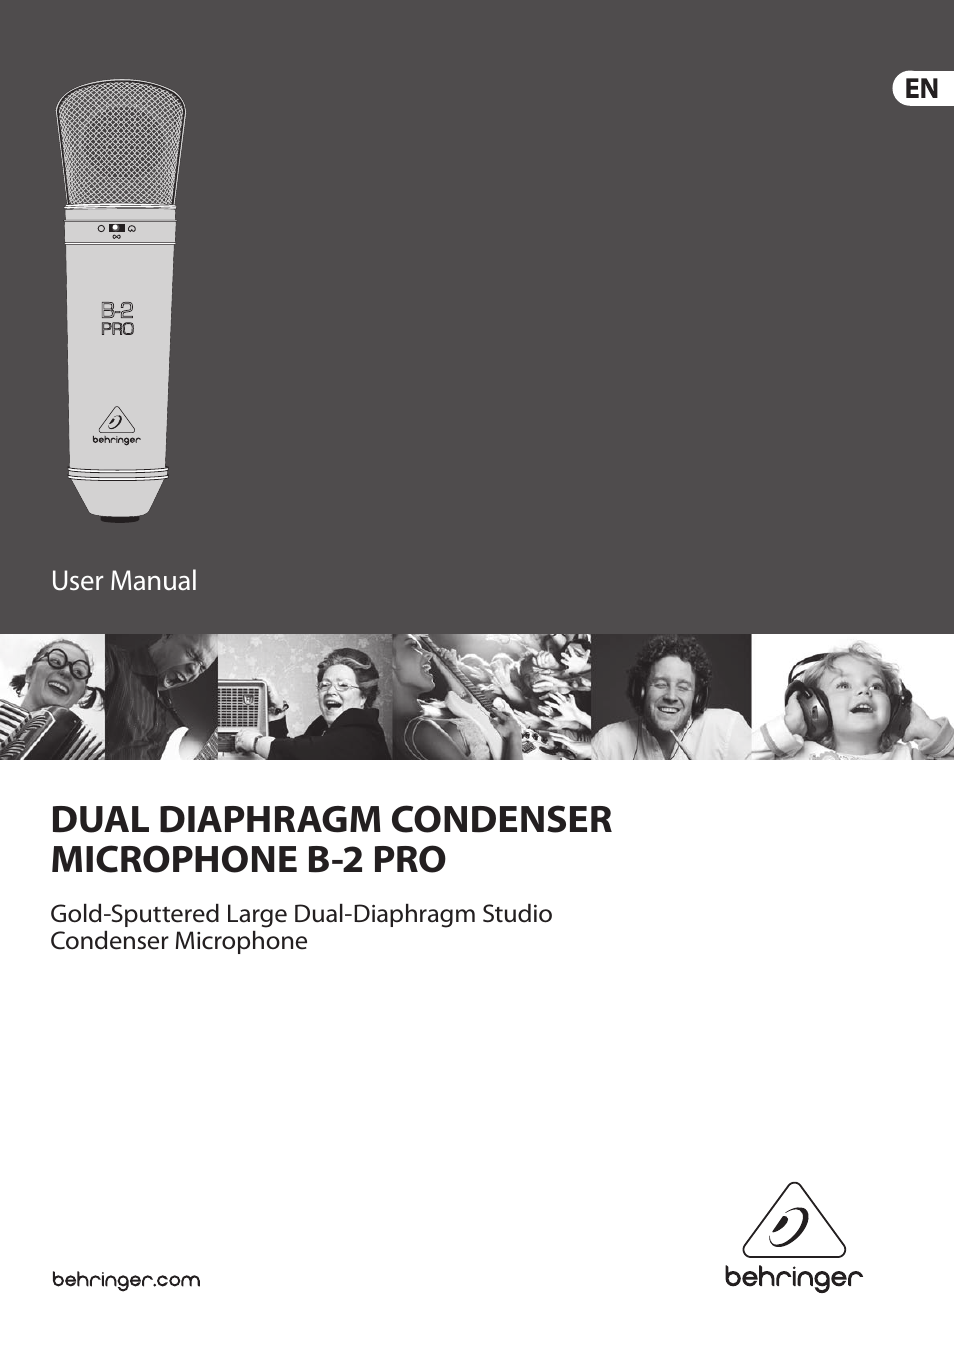 Gold-Sputtered Larg Dual-Diaphragm Studio Condenser Microphone B-2 Pro